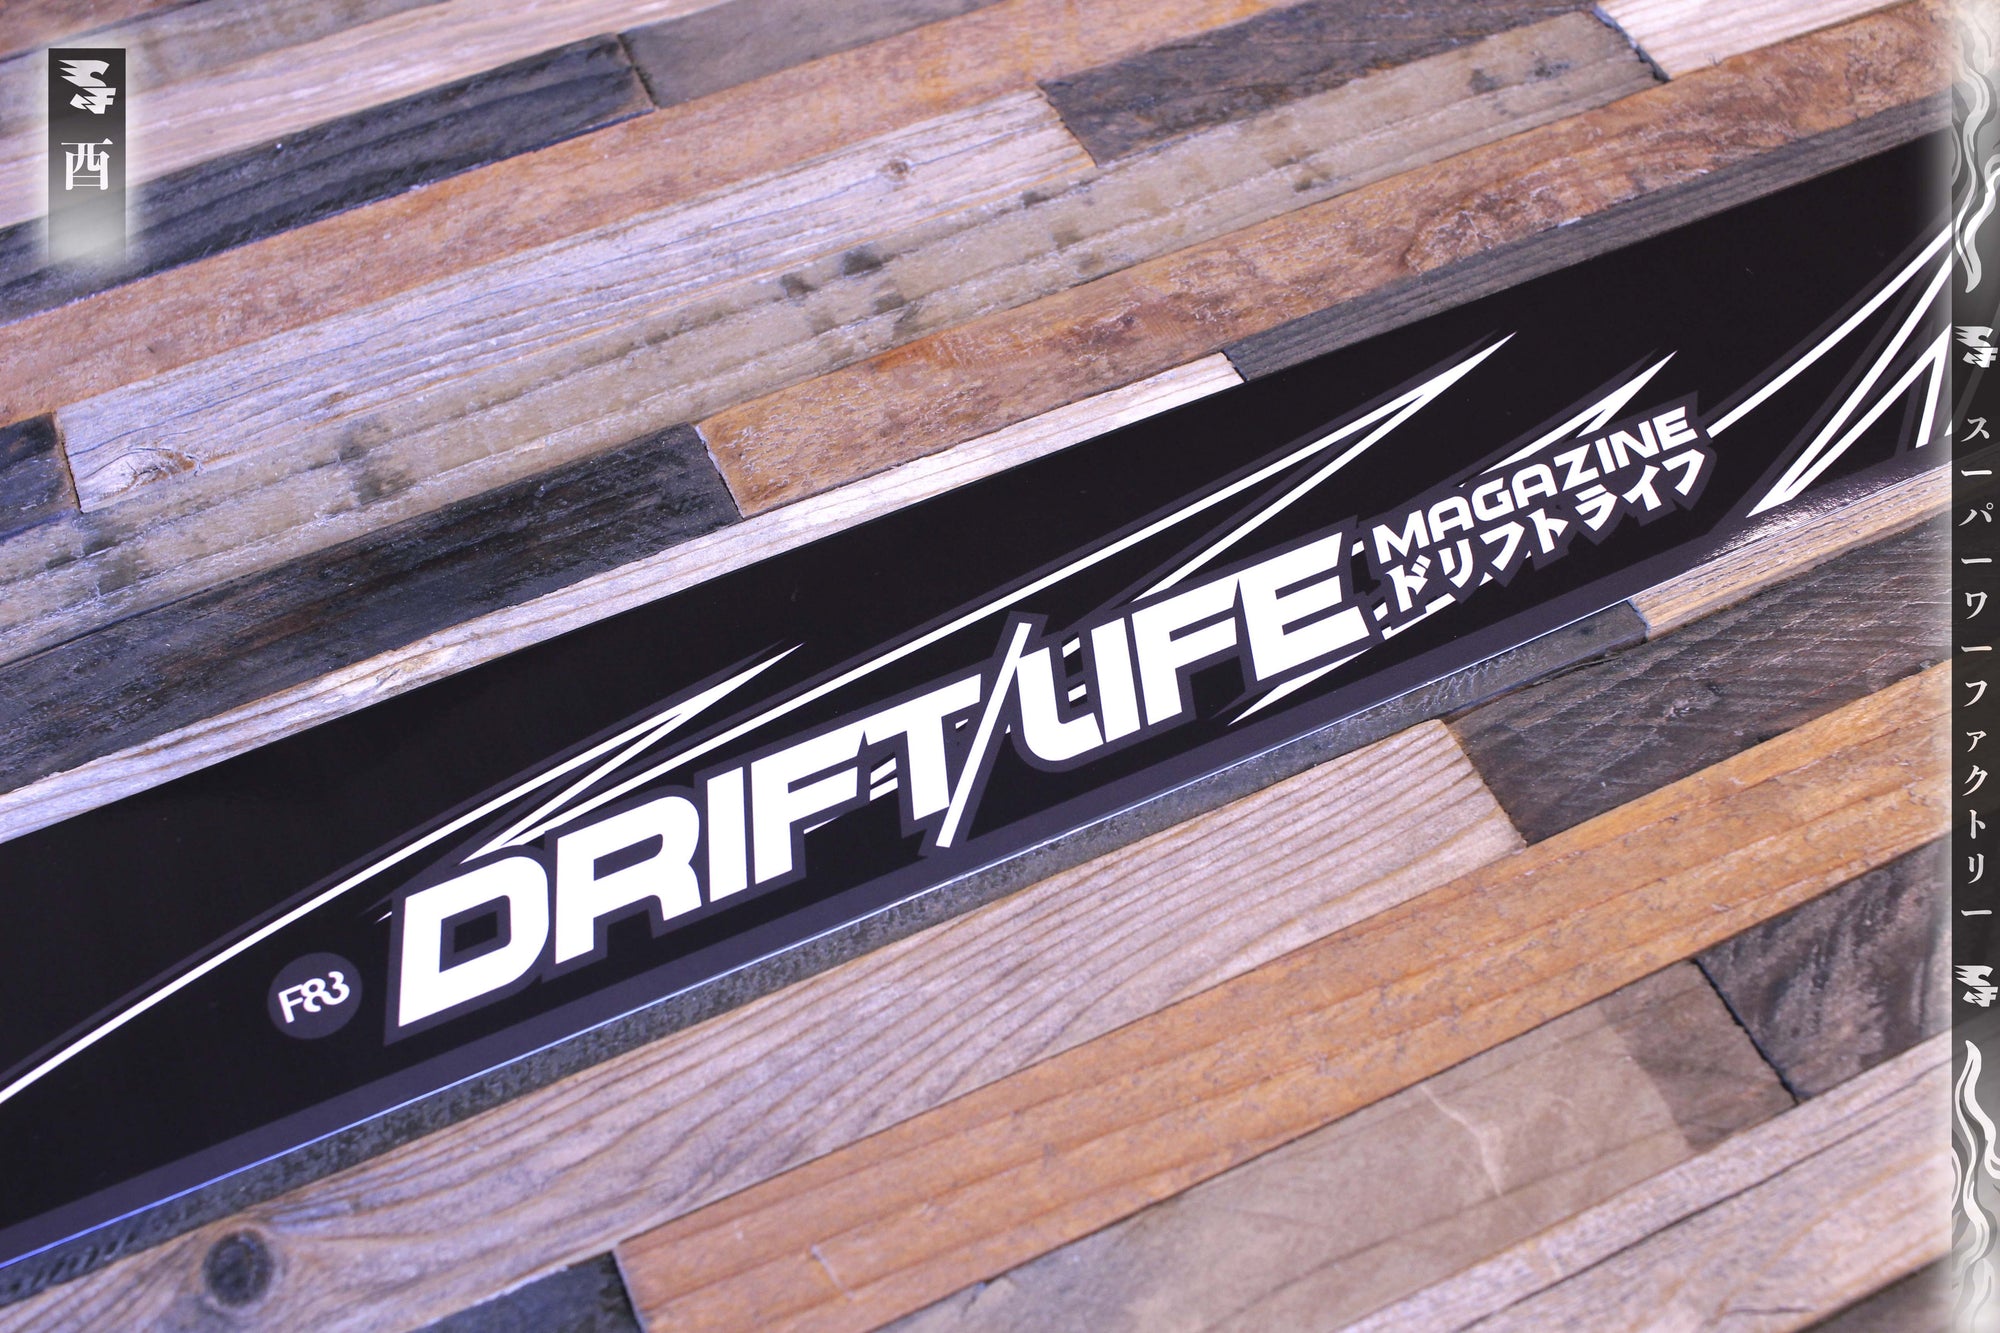 Drift Life Magazine Windshield Banner